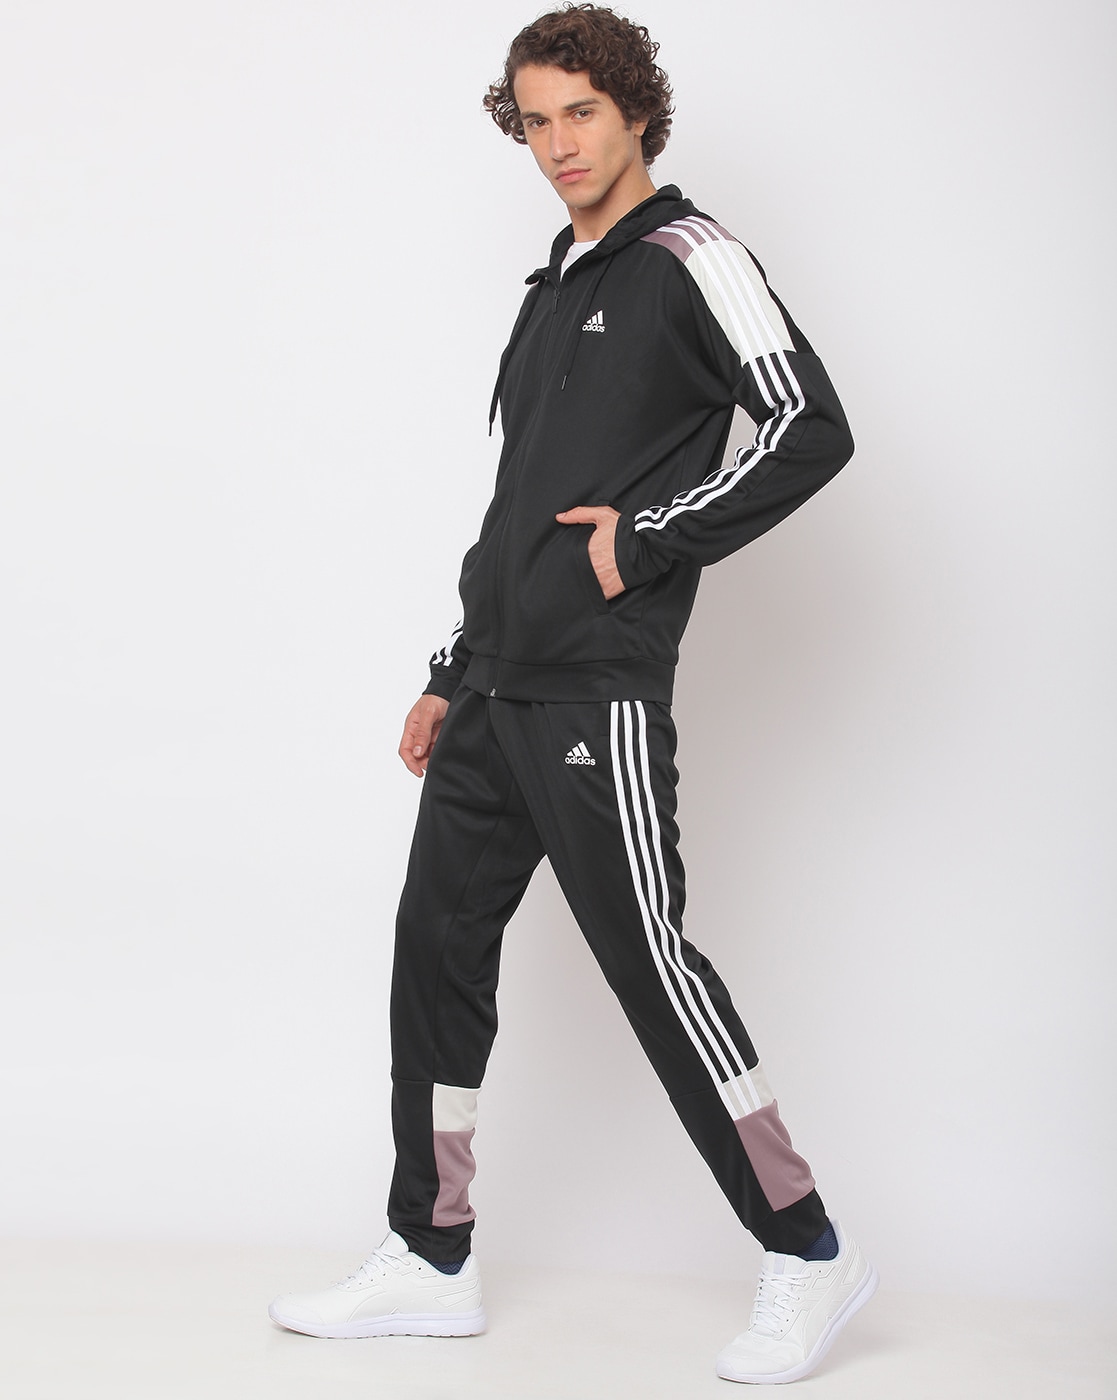 Adidas mi team Sprint Suit - Stadium Sportswear